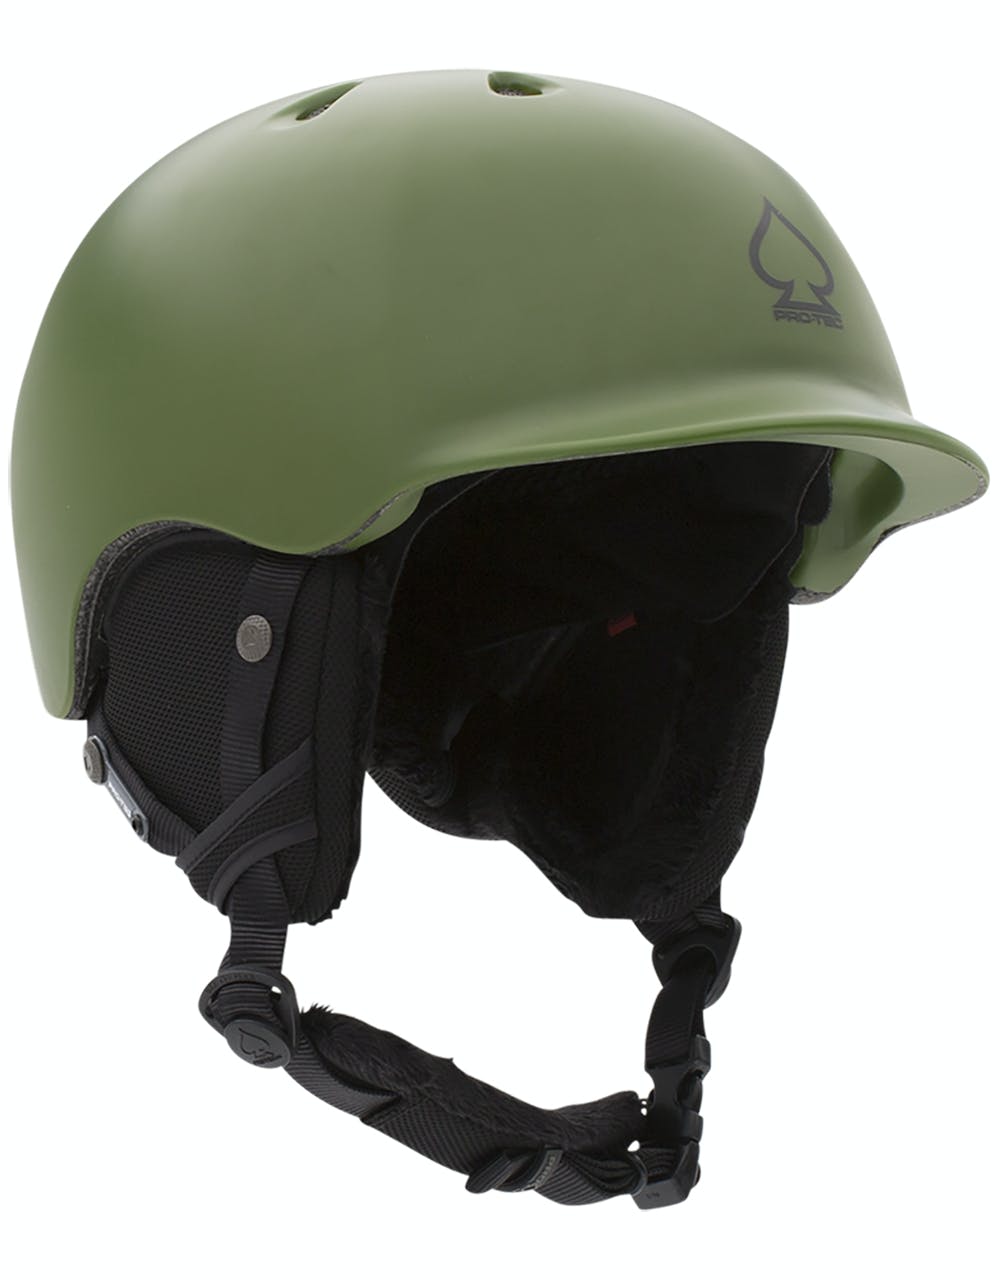 Pro-Tec Riot Snowboard Helmet - Matte Army